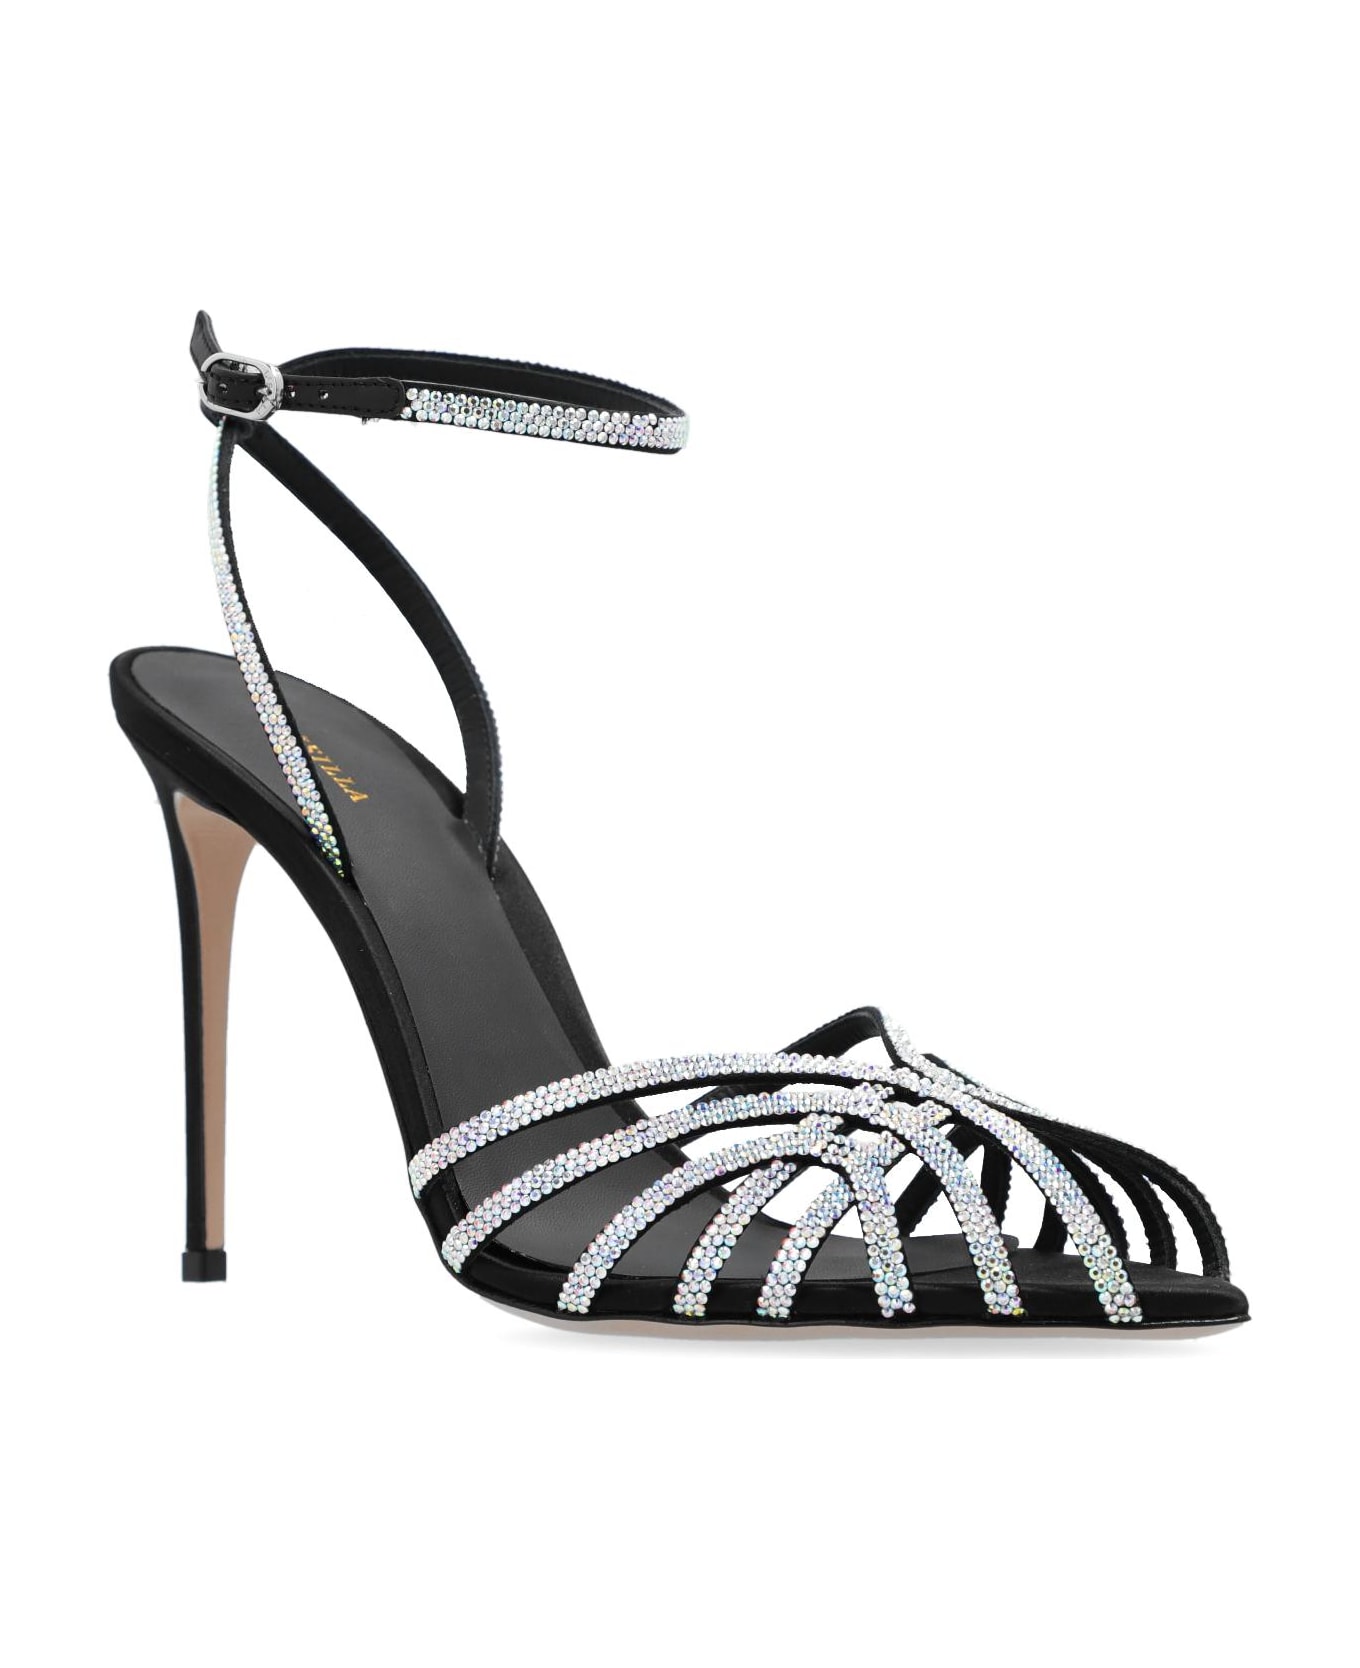 Le Silla 'bella' Heeled Sandals - NERO/CRYSTAL